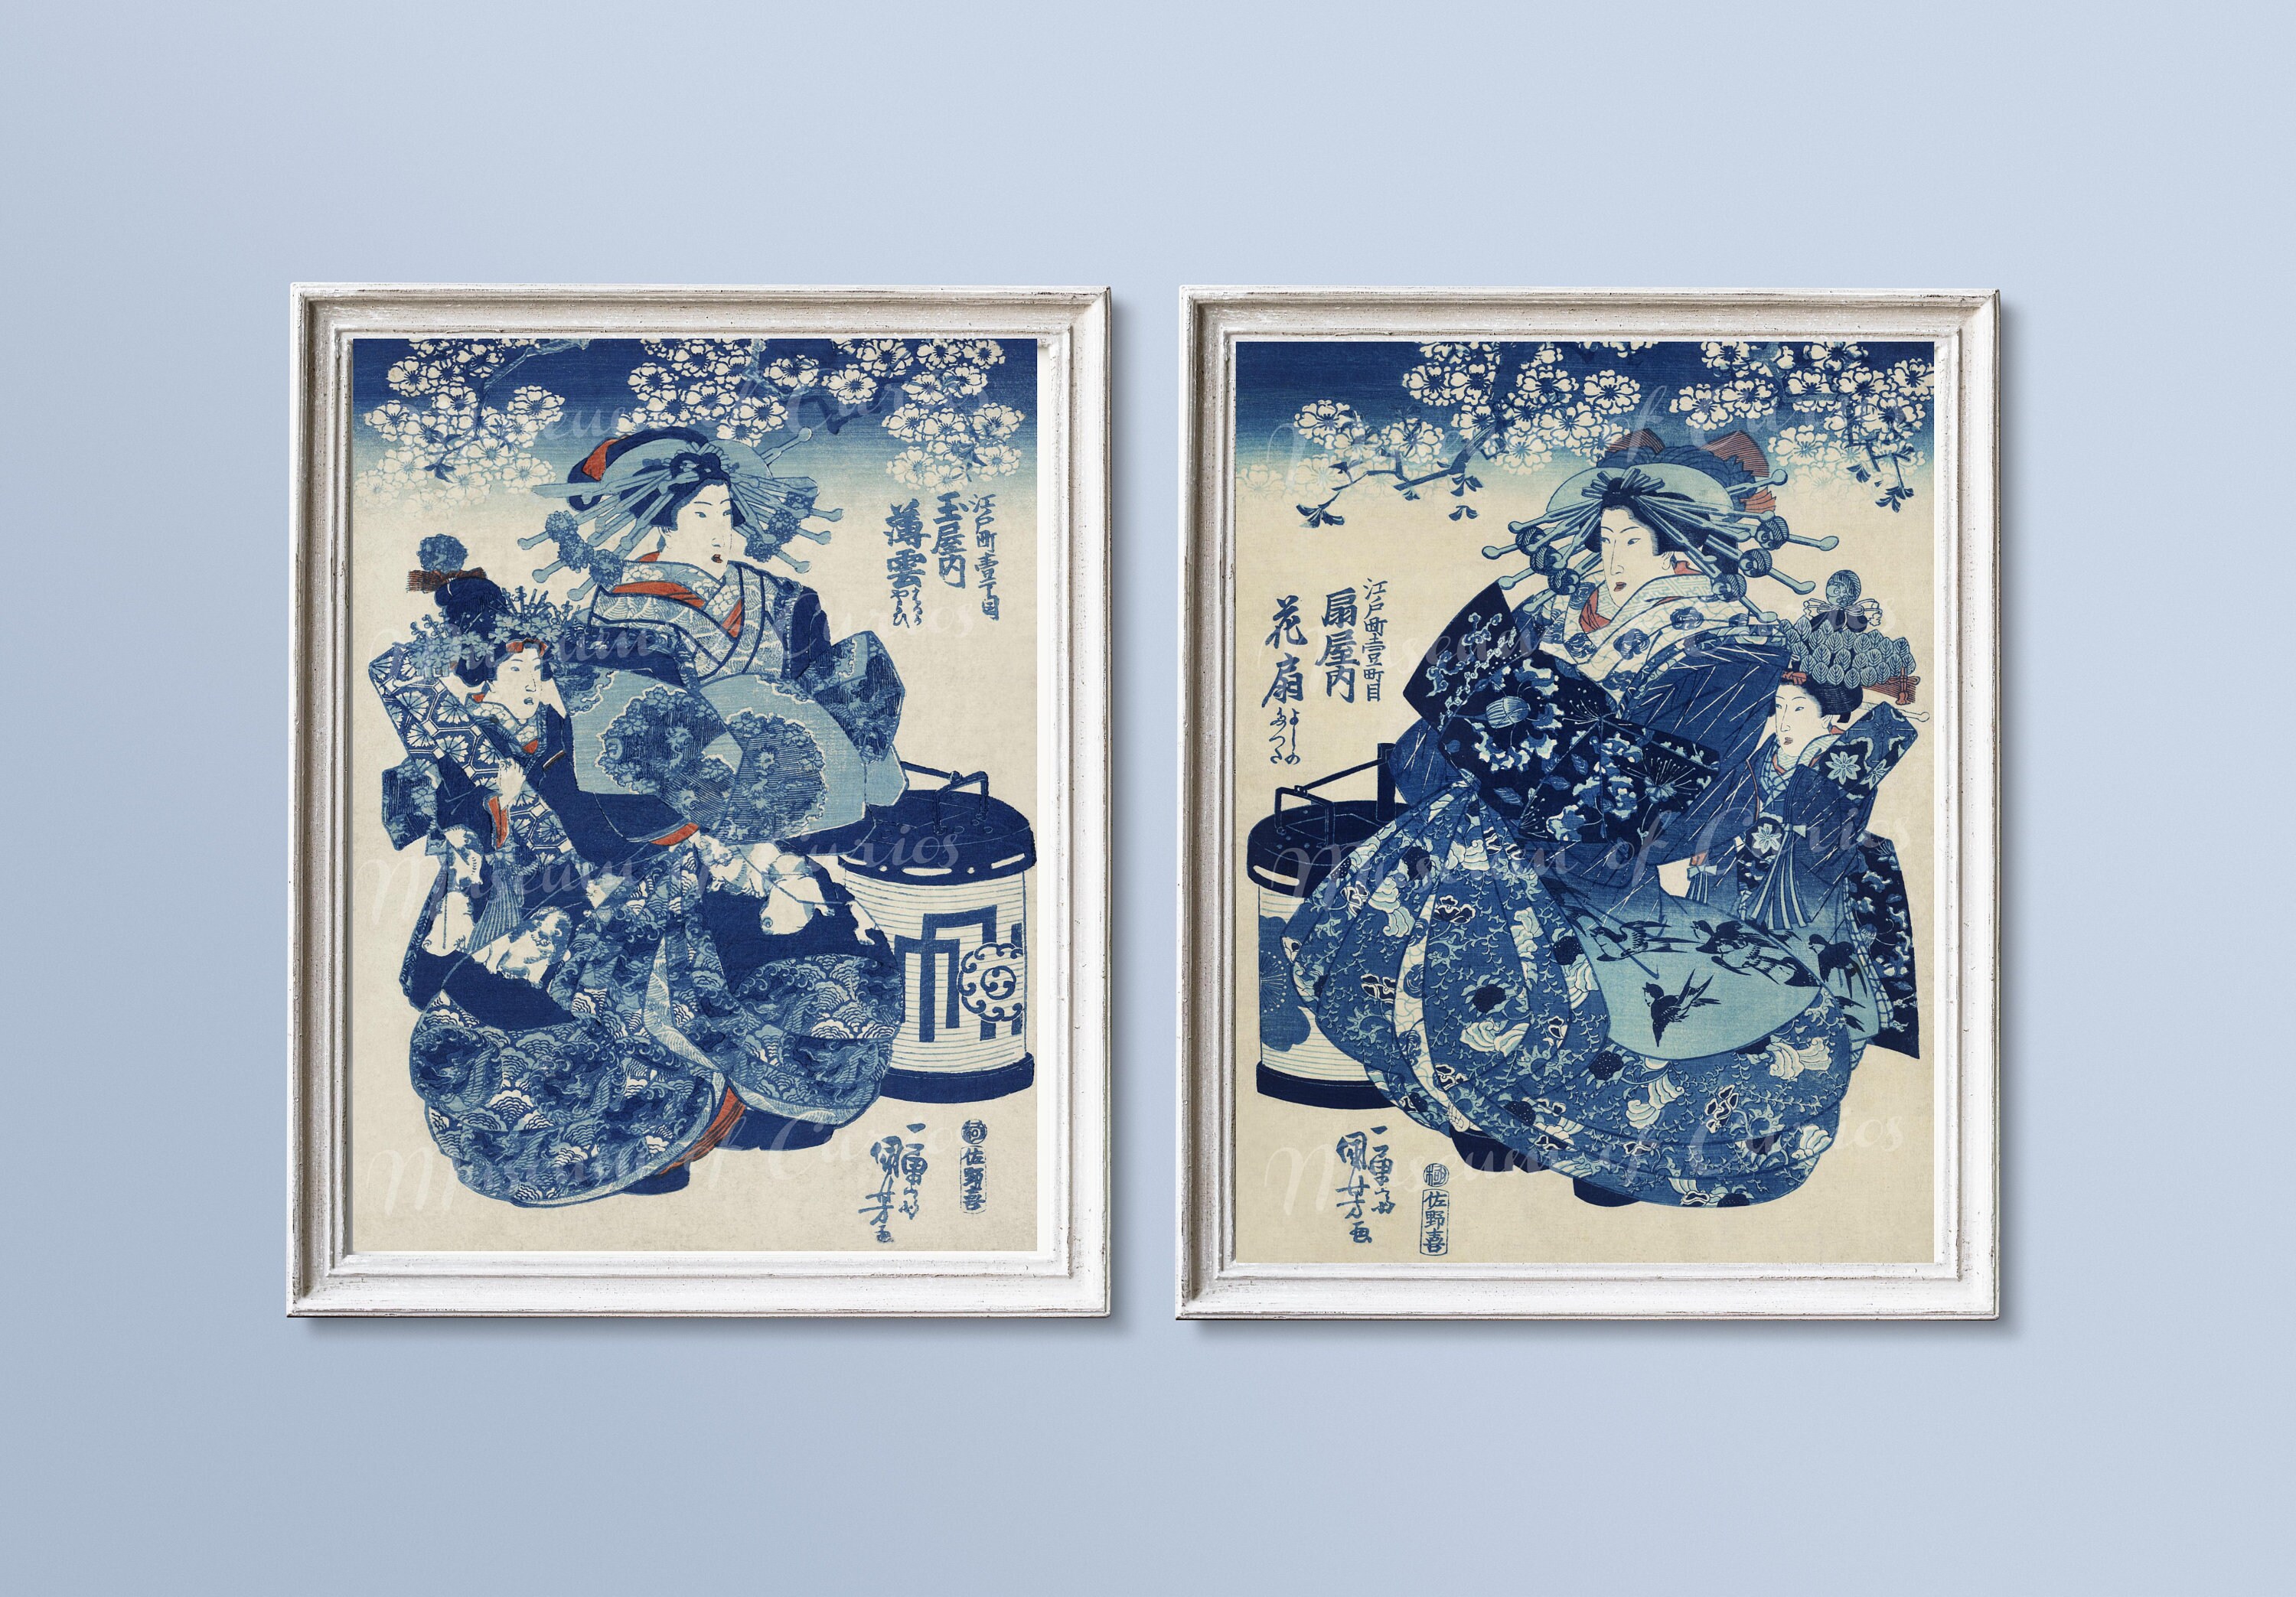 Japanese Print/Japanese Art/Home Decor Wall Art/Utagawa Kuniyoshi Print/Japanese Poster/Instant Download